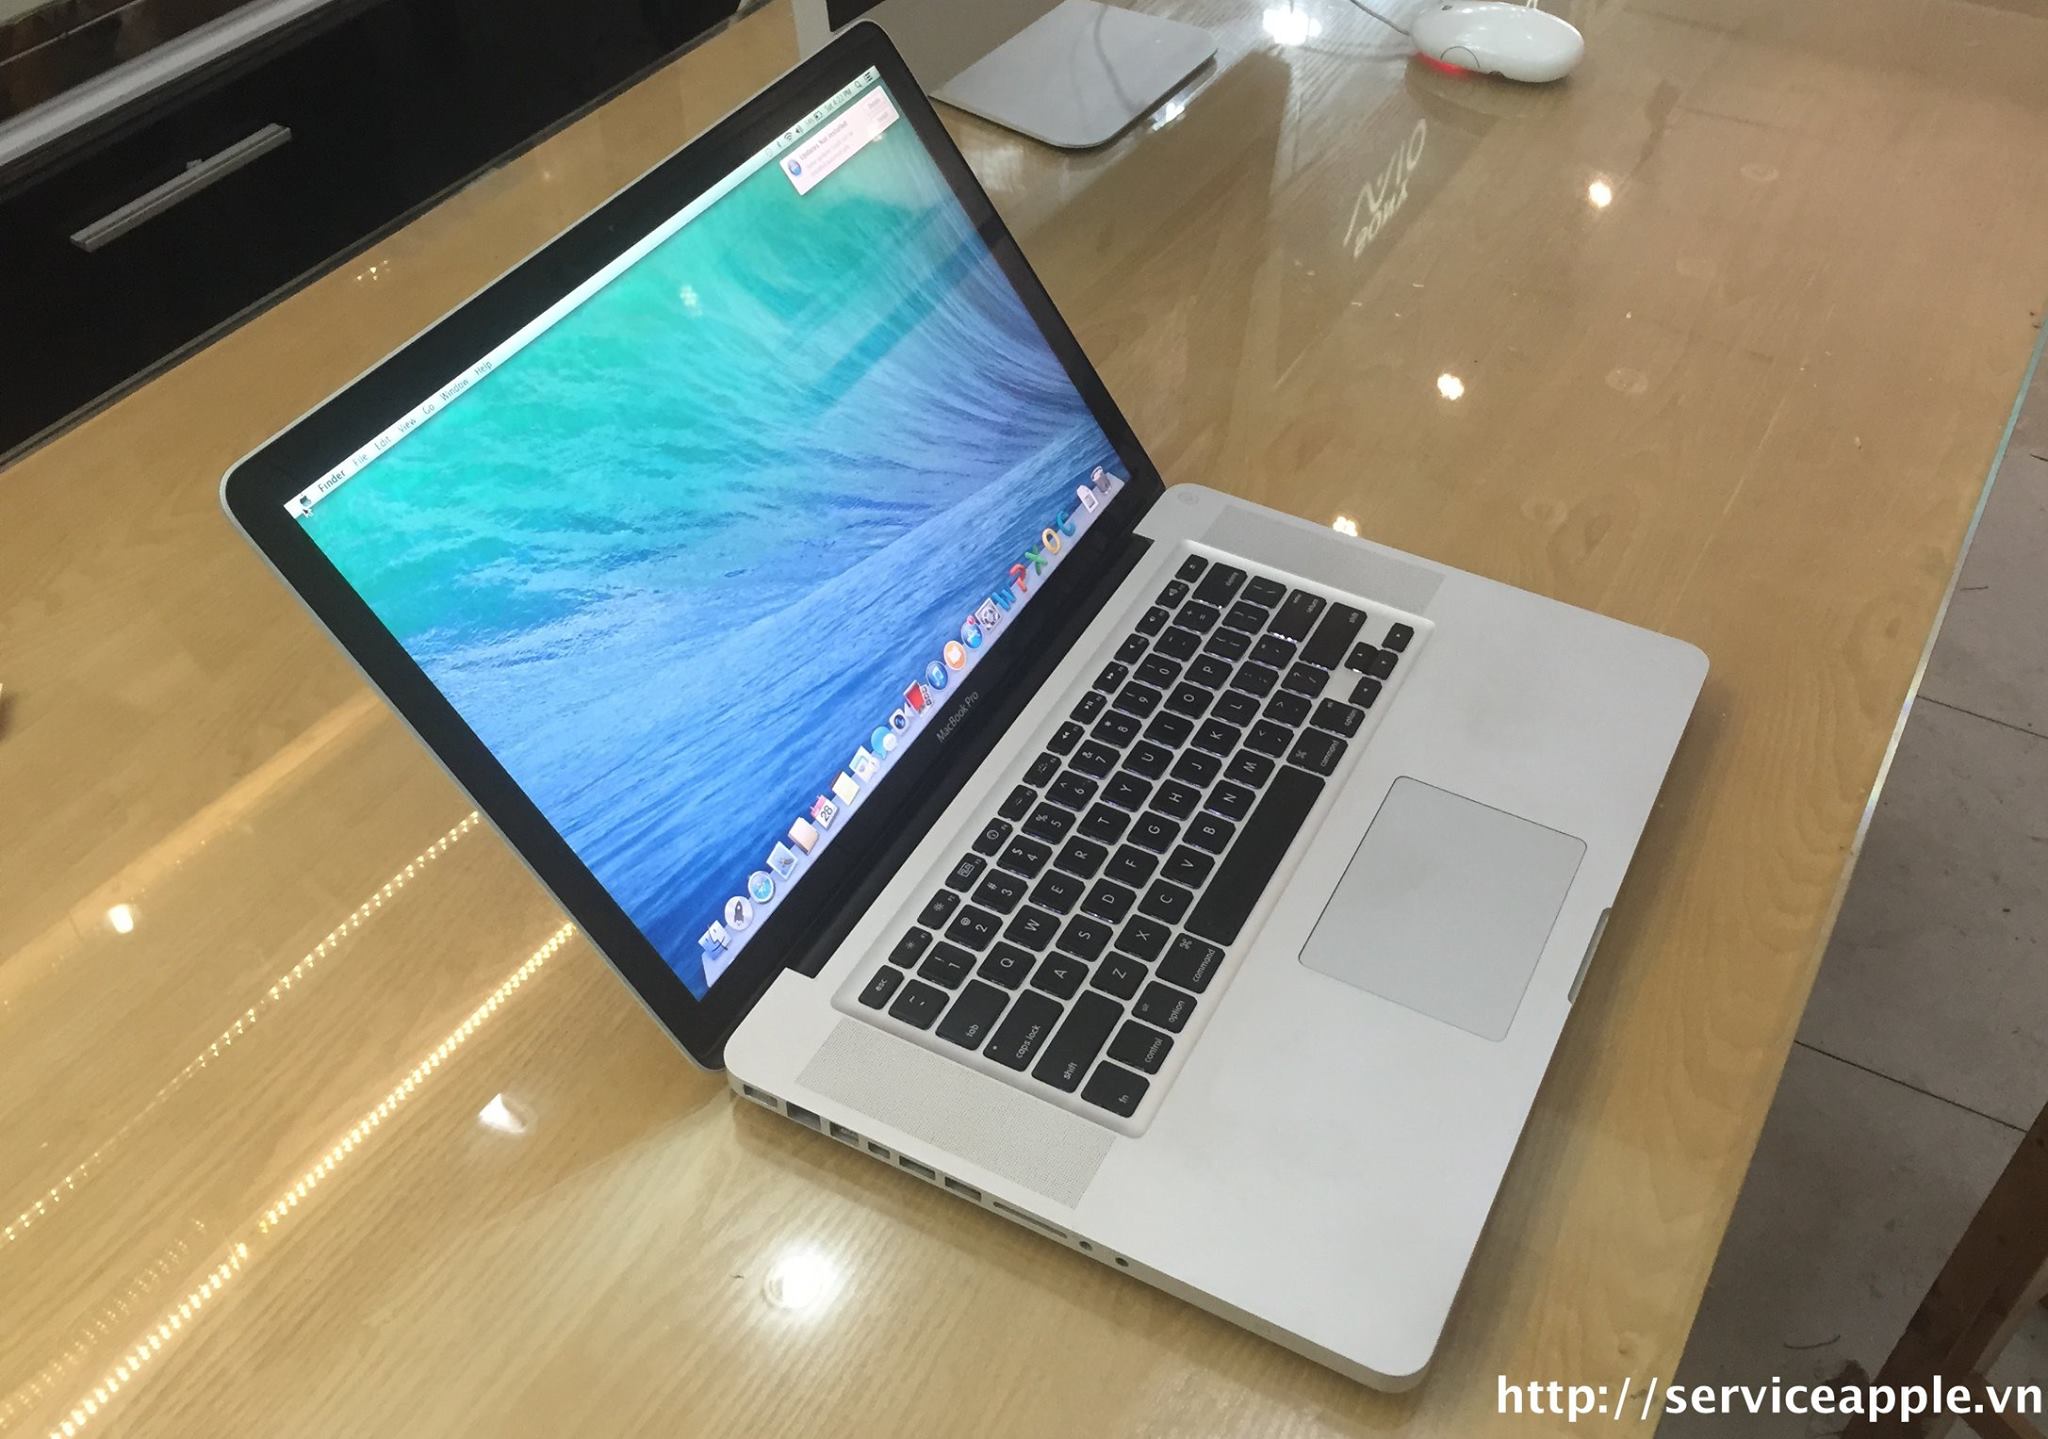  MacBook Pro MD103 Full Option .jpg